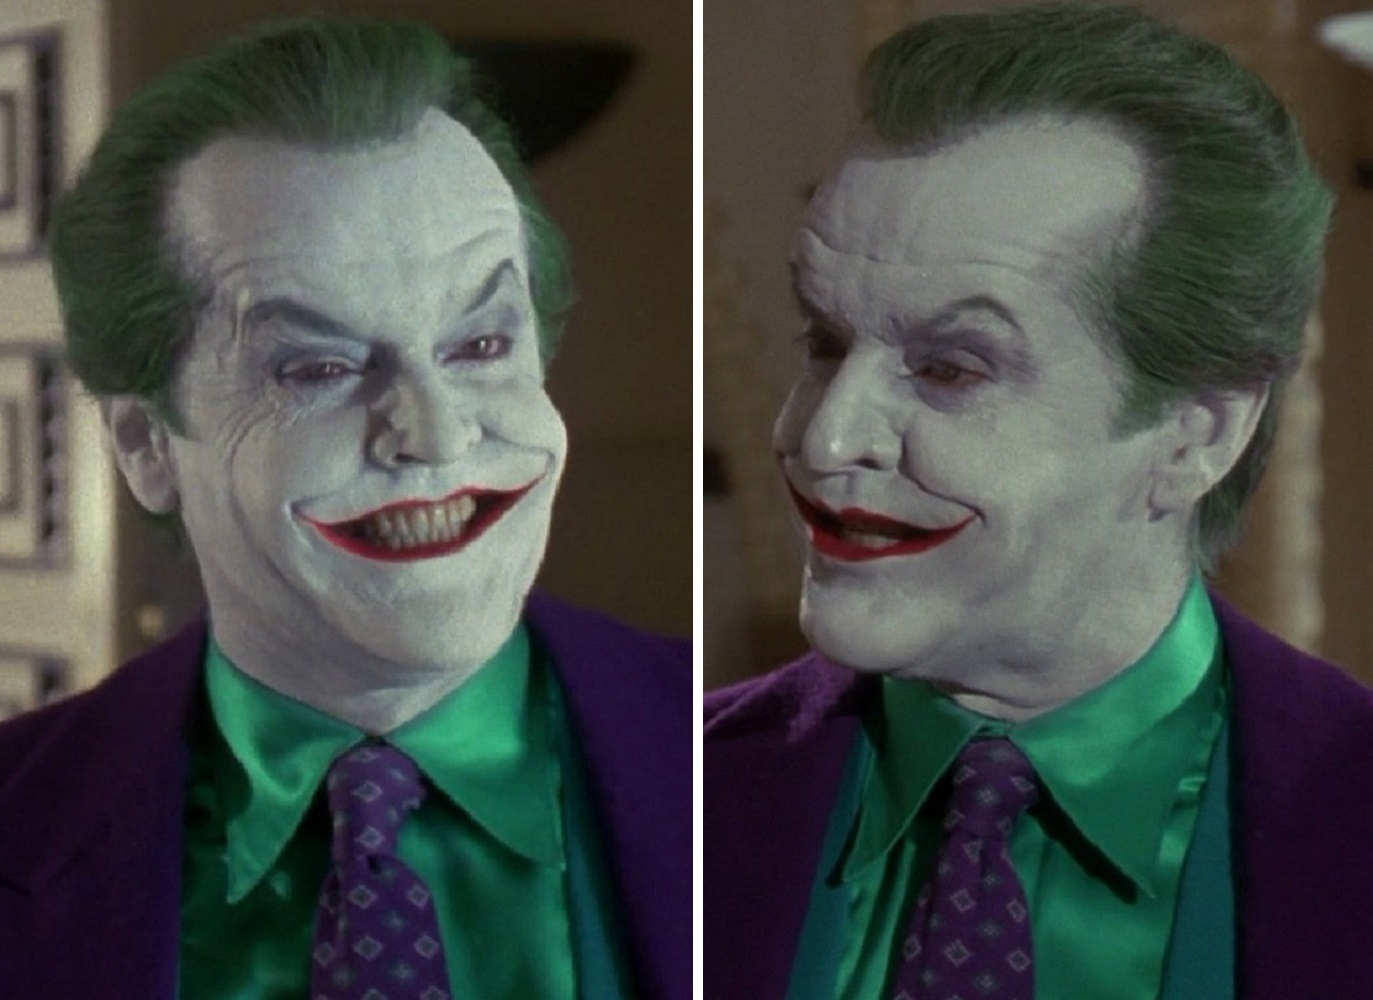 Joker costume - shirt